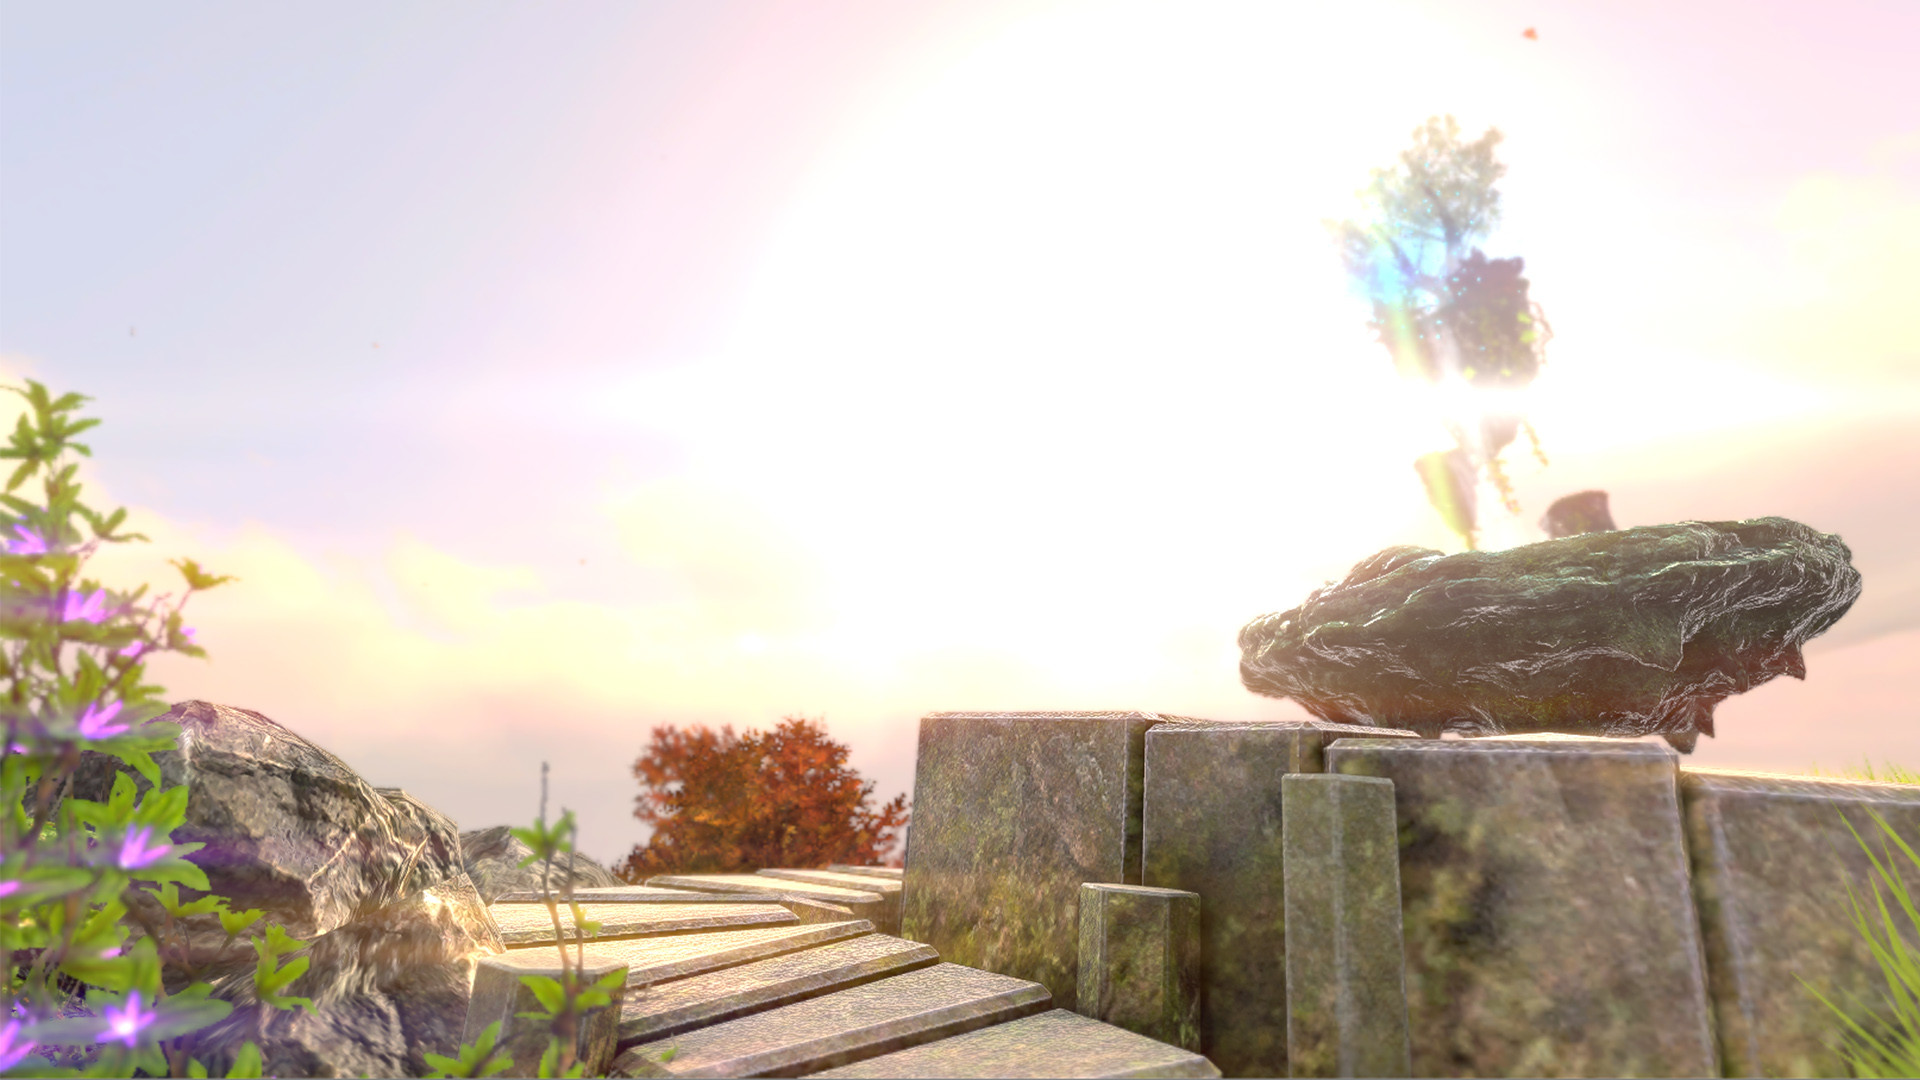 Soulpath: the final journey screenshot